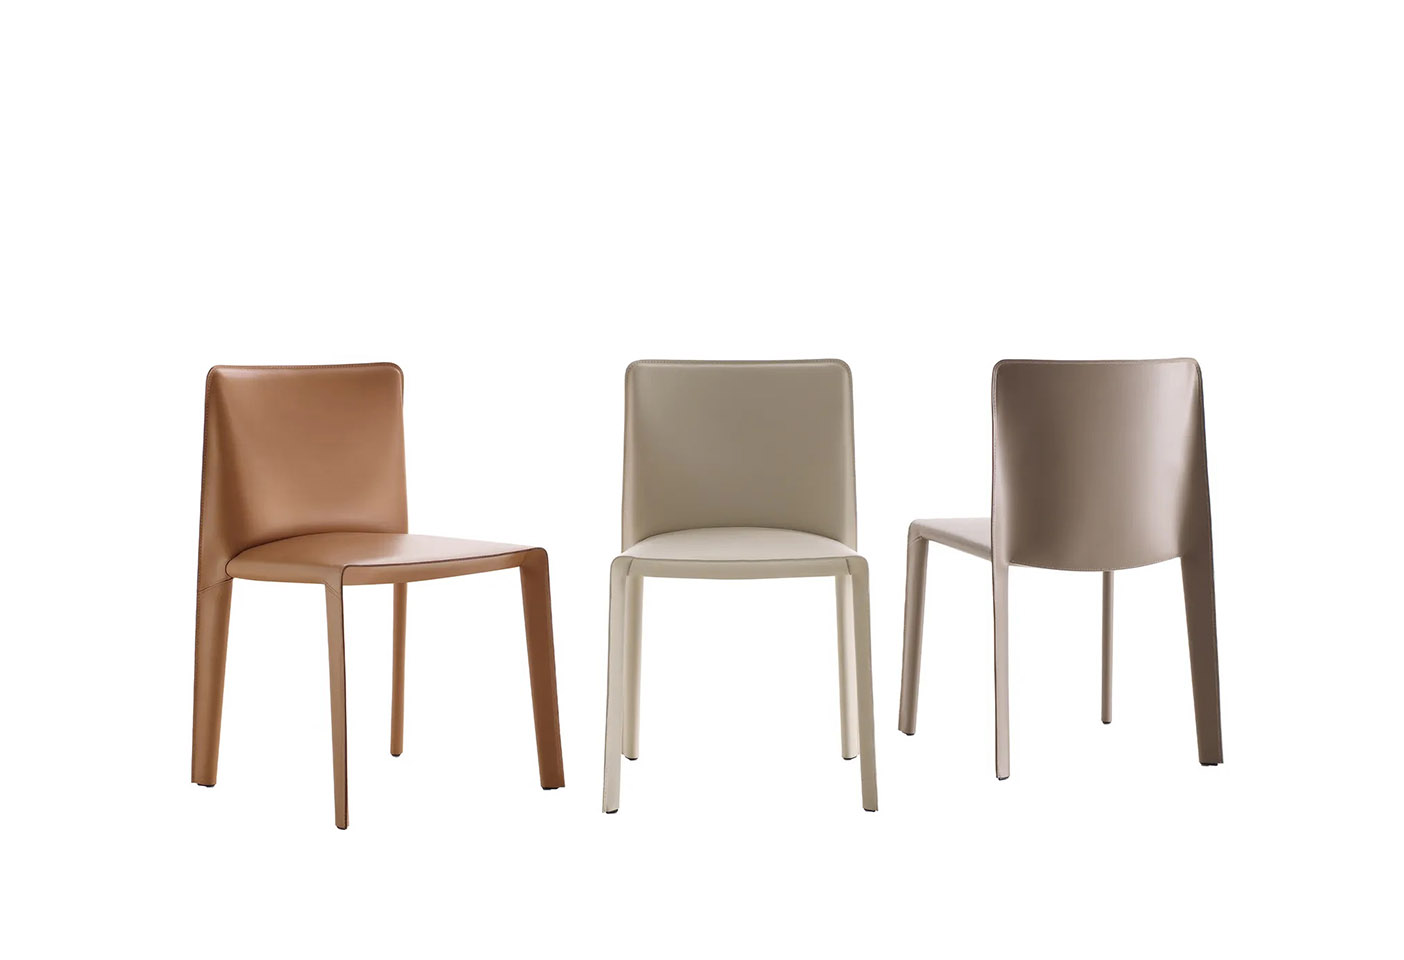 The Doyl chairs designed by Antonio Citterio for B&B Italia. Photo c/o B&B Italia. 